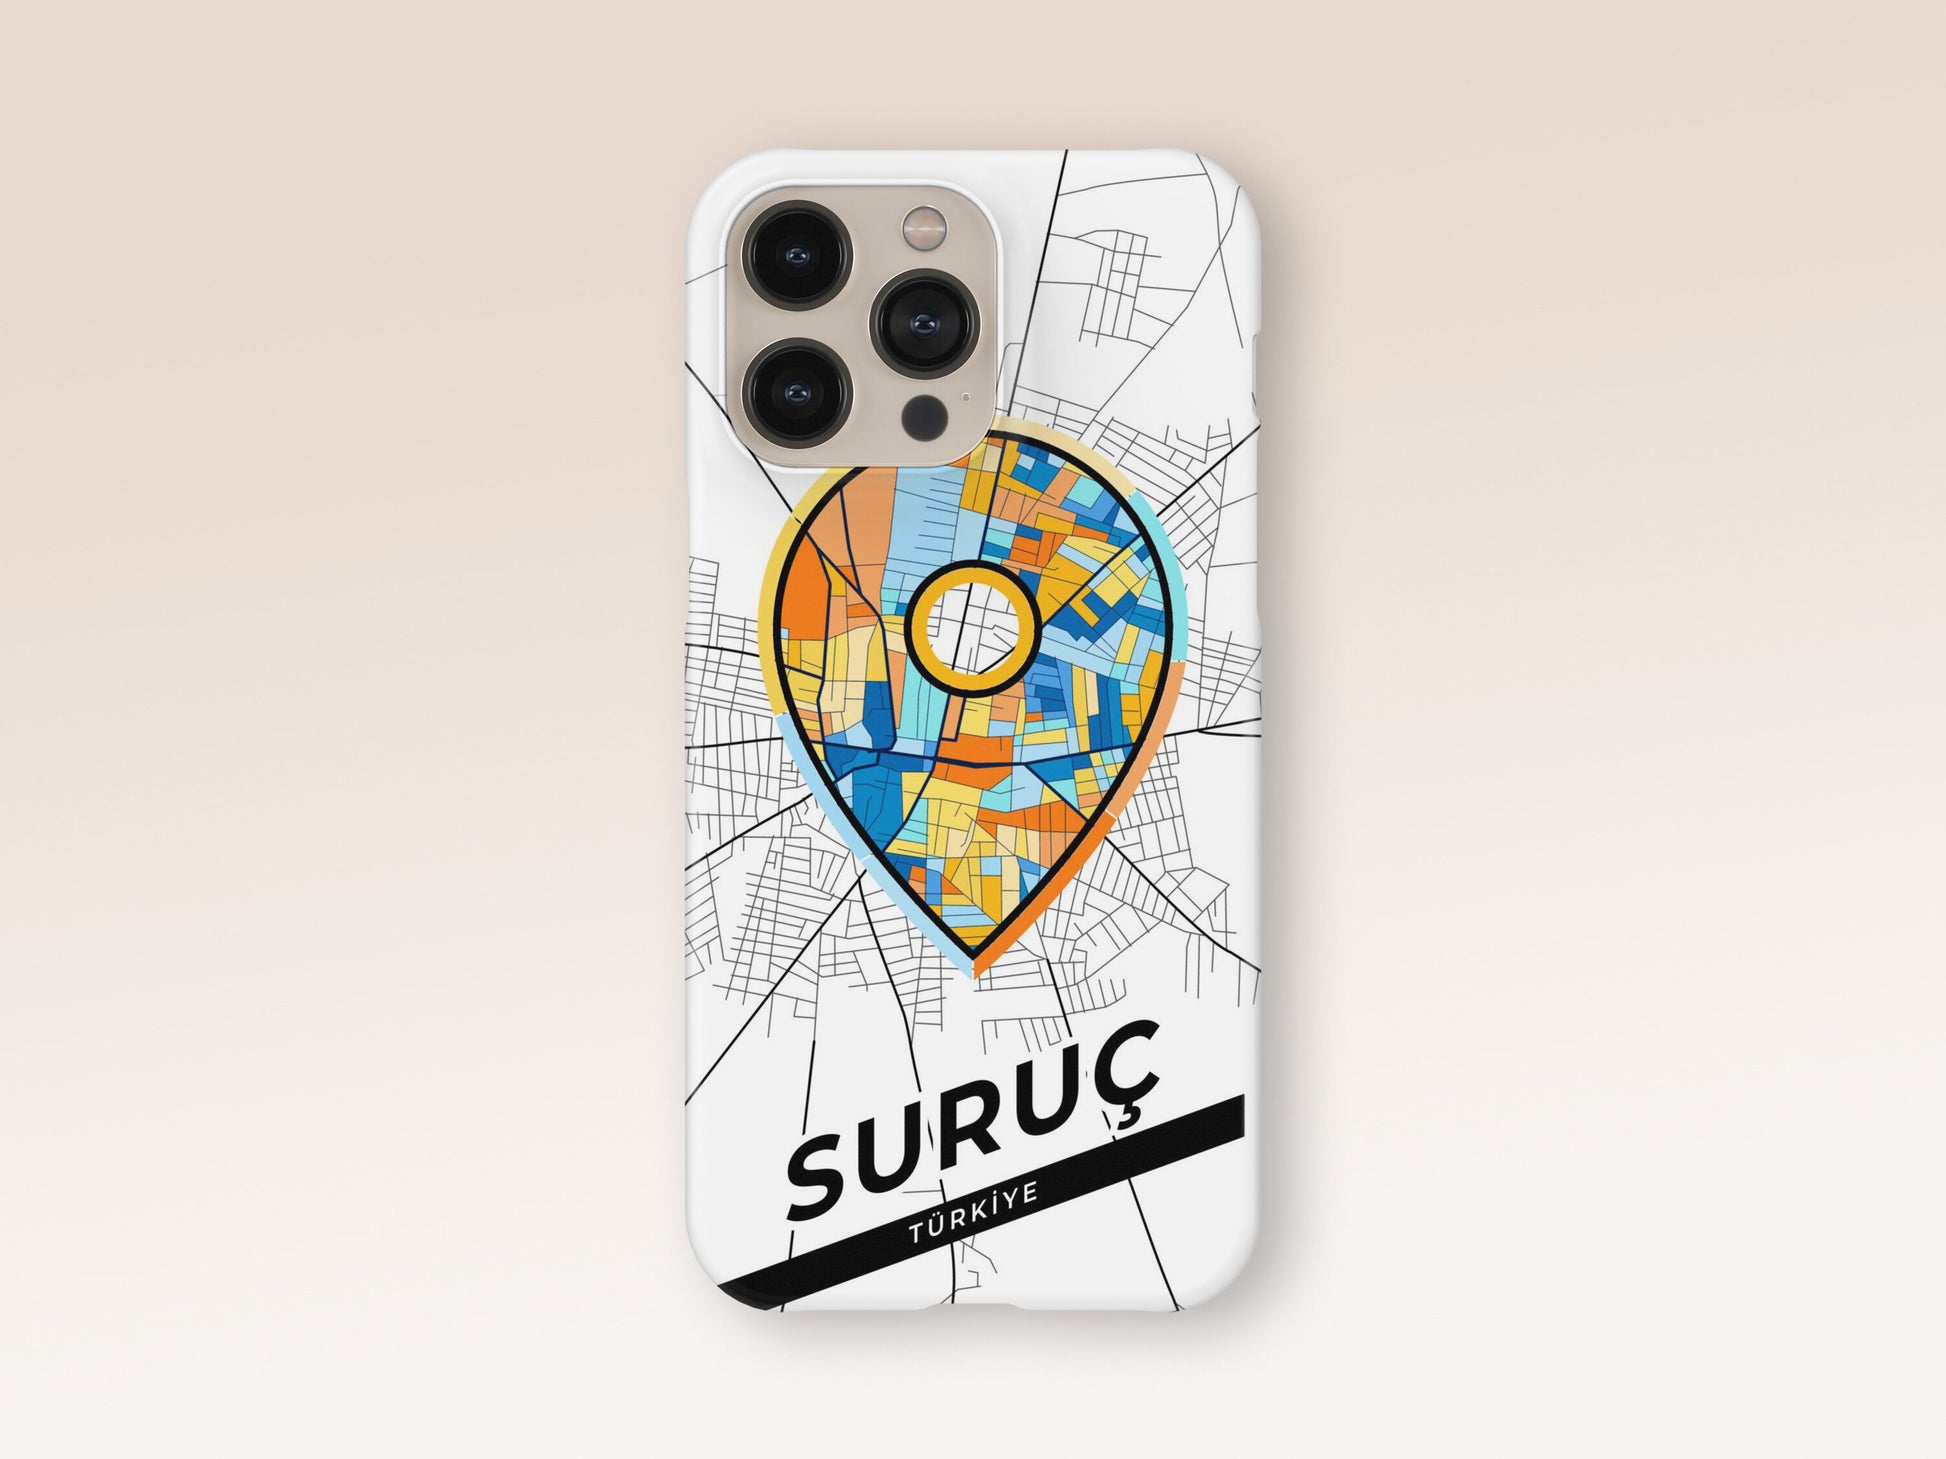 Suruç Turkey slim phone case with colorful icon 1